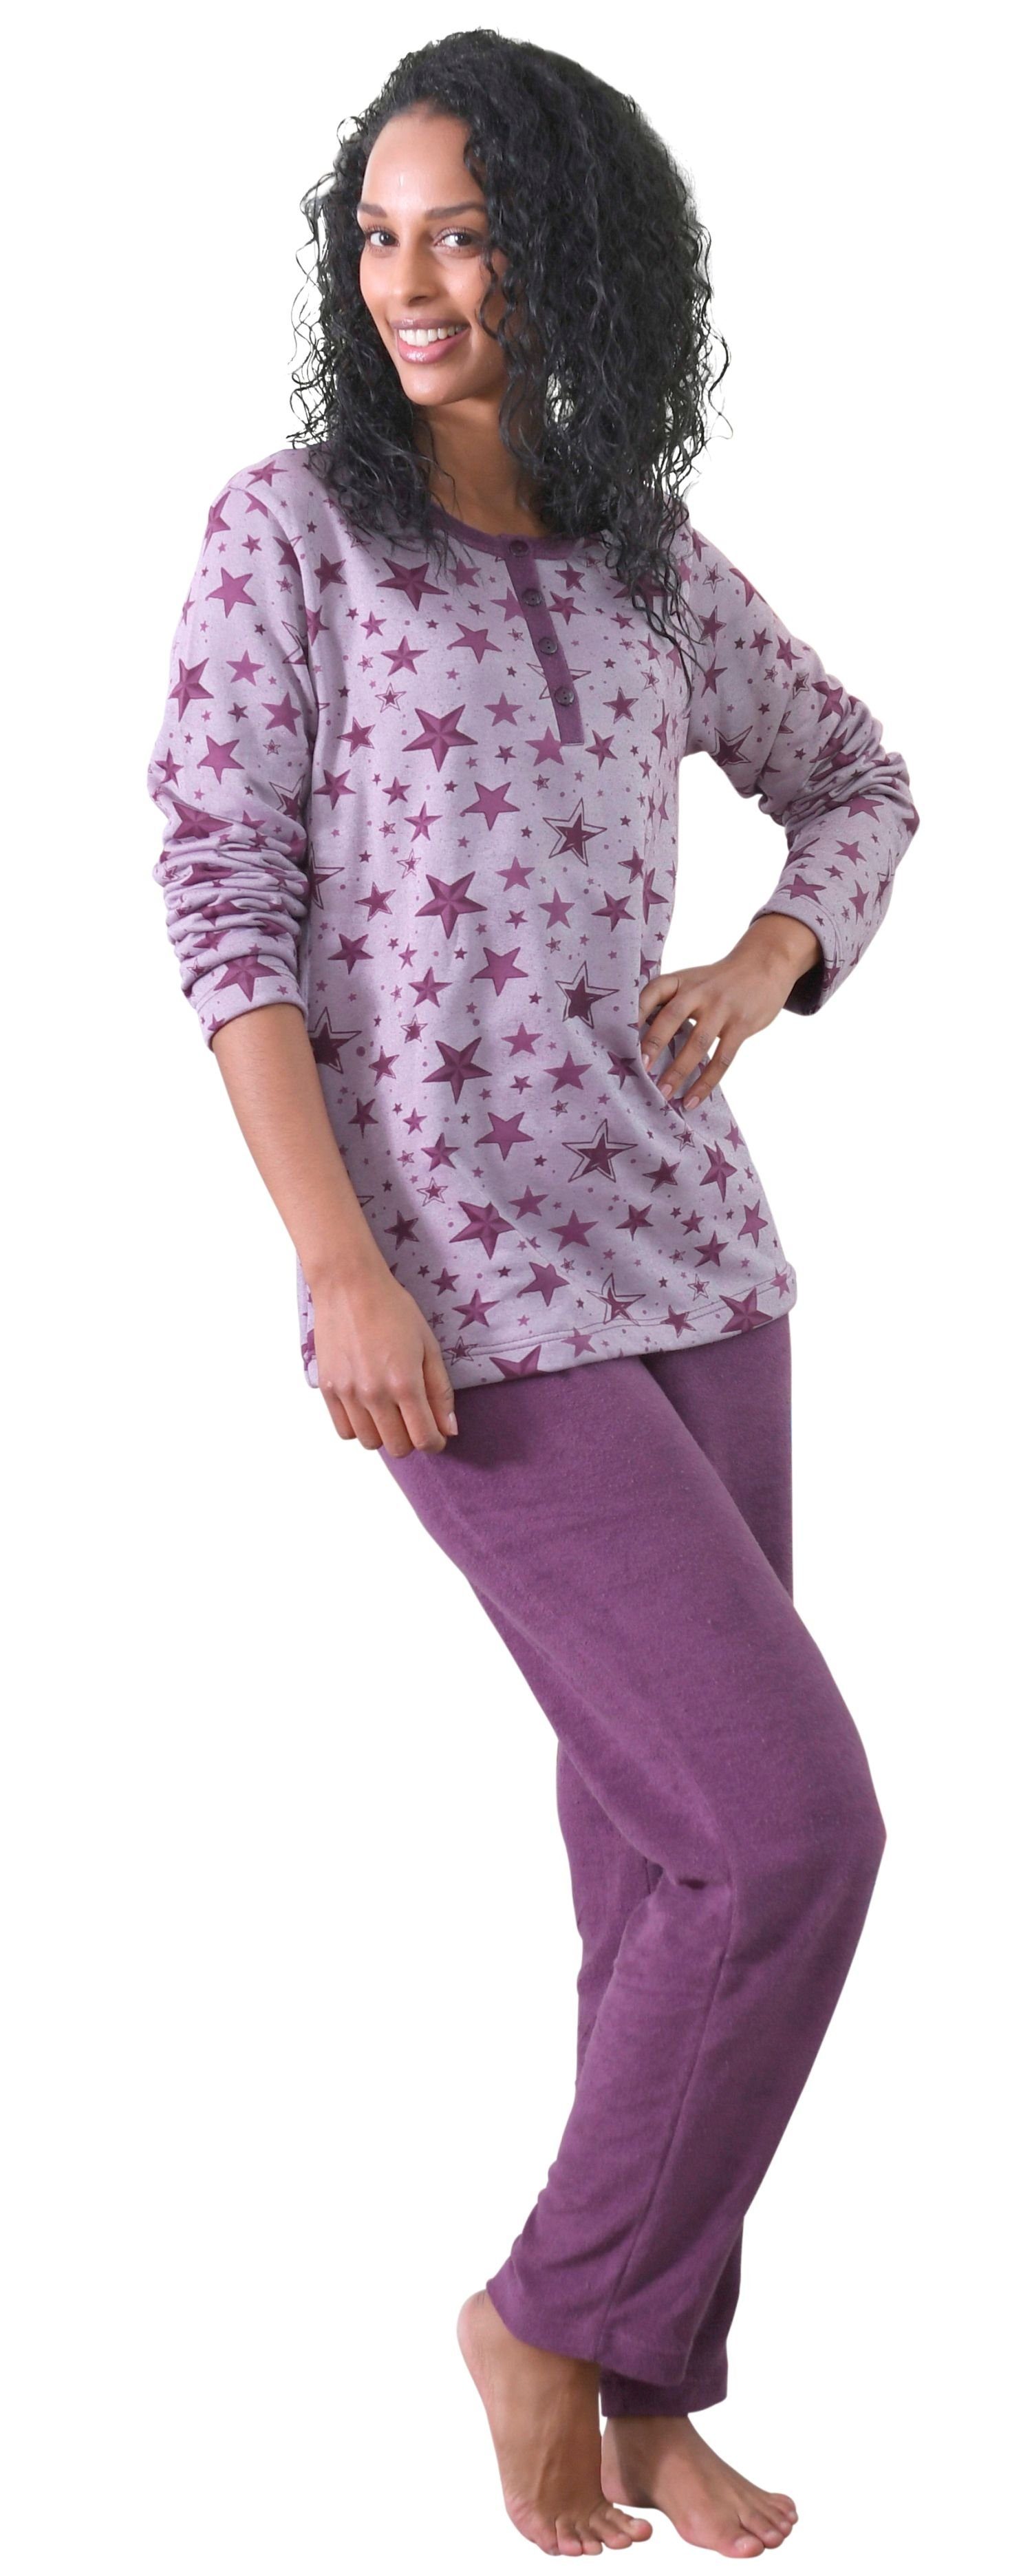 Normann Pyjama Damen Frottee Schlafanzug Sterne als Motiv - auch in Übergrößen